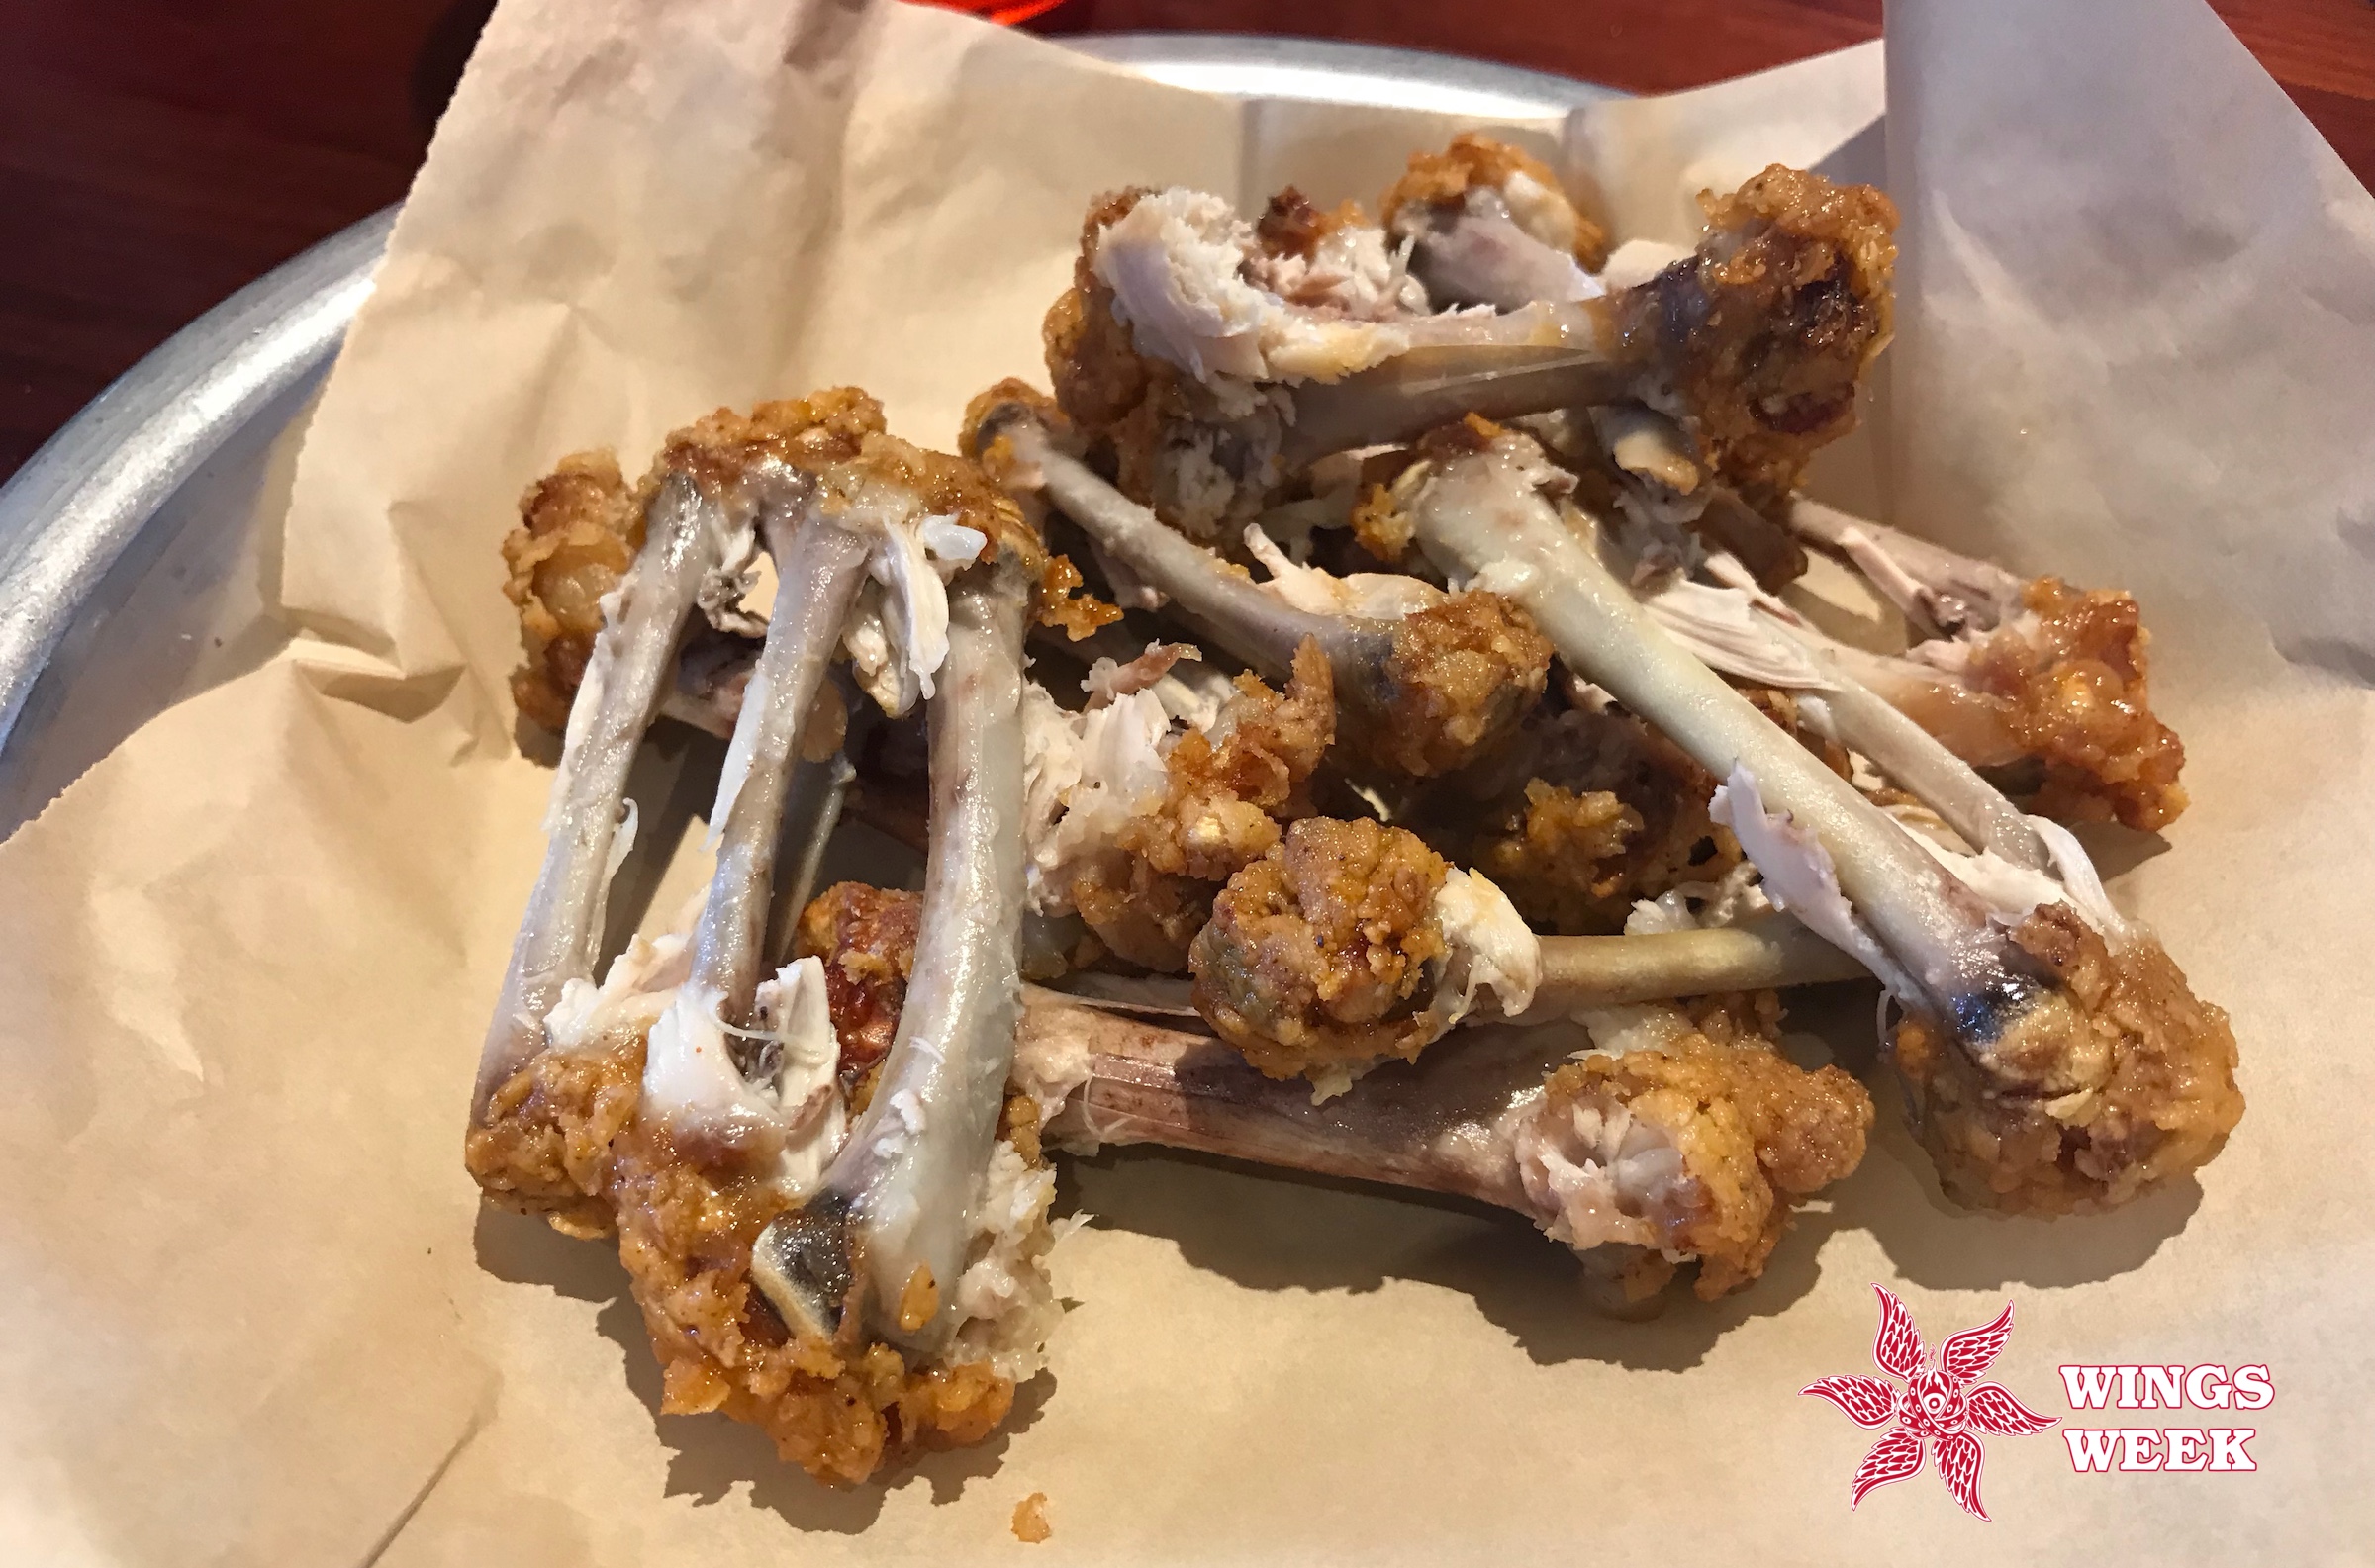 Chicken wing bone pile in Texas